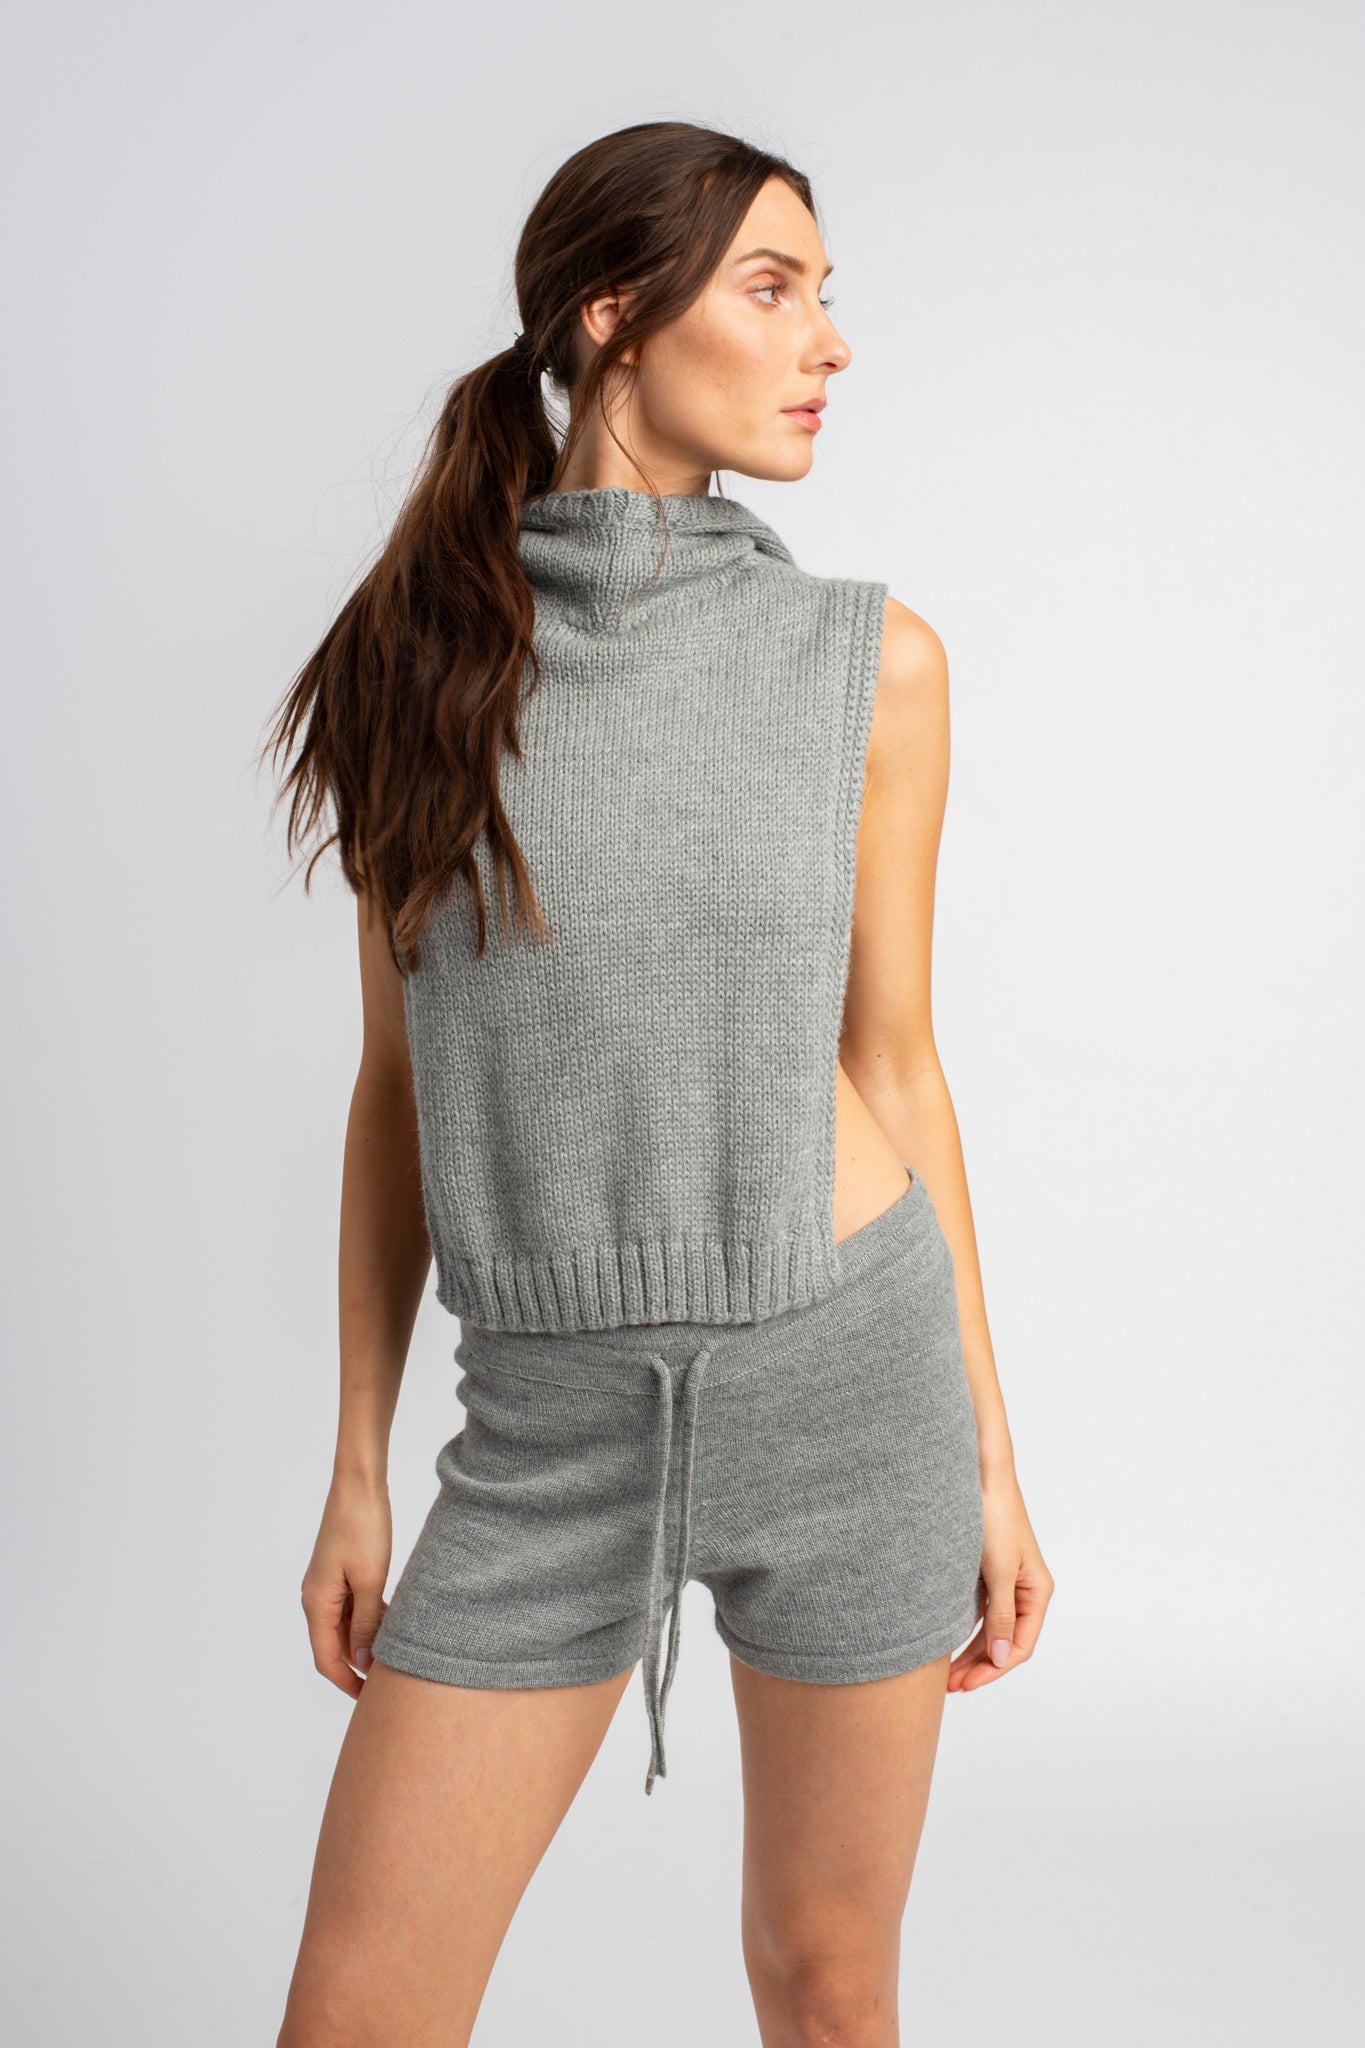 Model wearing poncho in light grey alpaca wool, standing